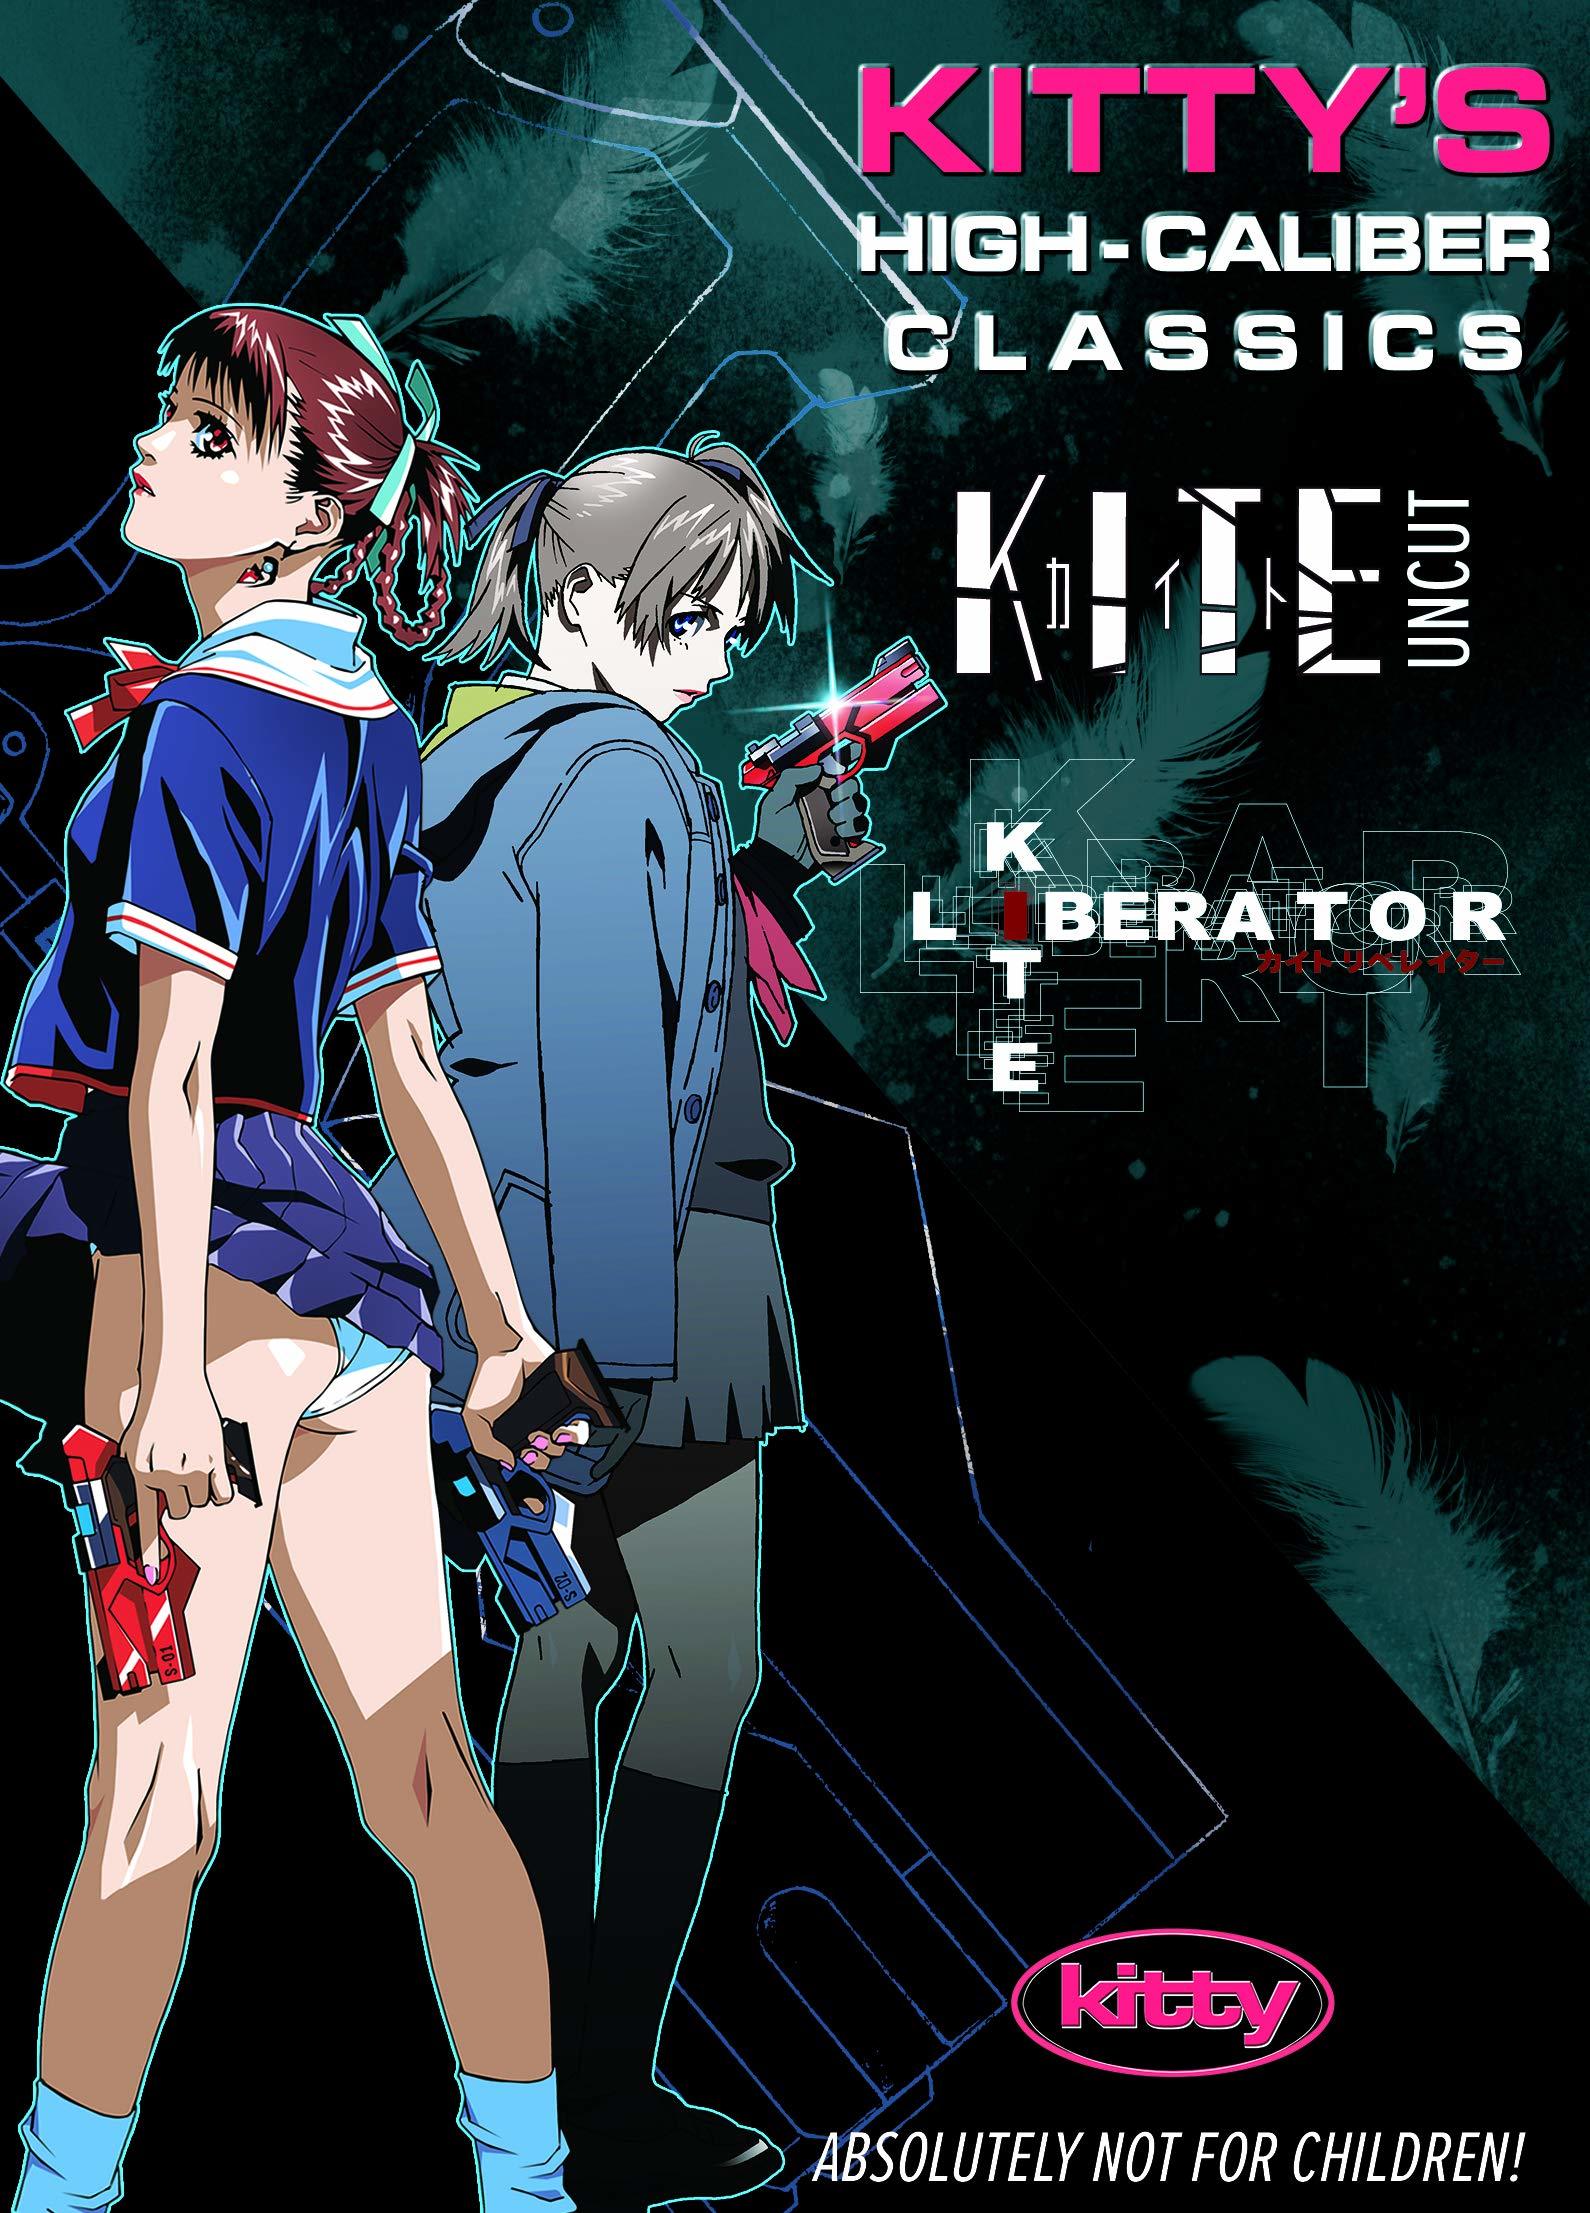 Kite Uncut / Kite: Liberator DVD (Kitty High-Caliber Classics)